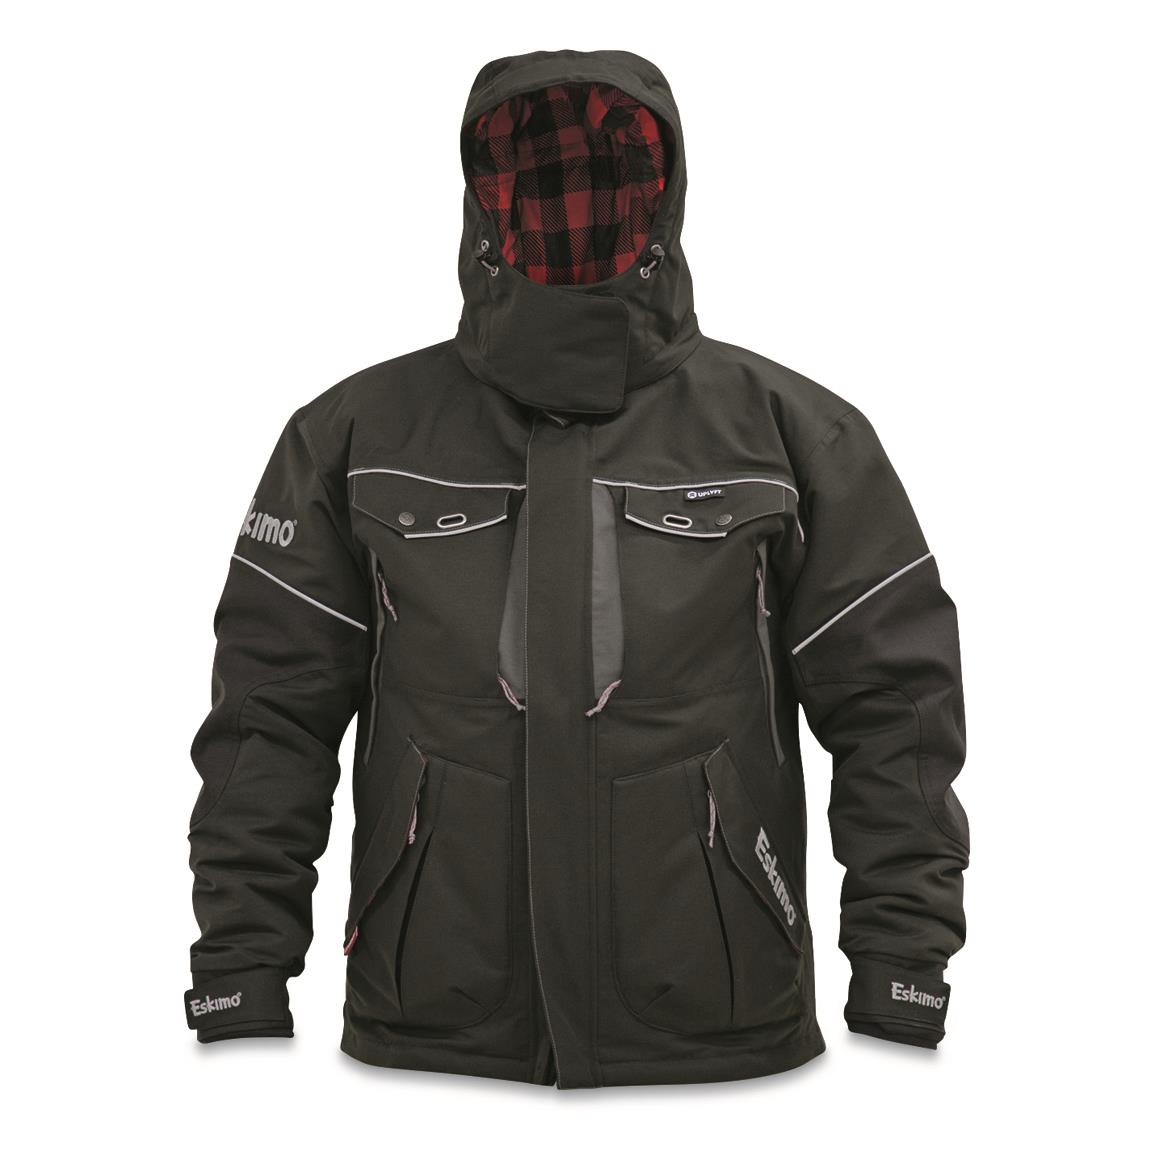 Eskimo Men's Legend Insulated Waterproof Jacket, Black Ice